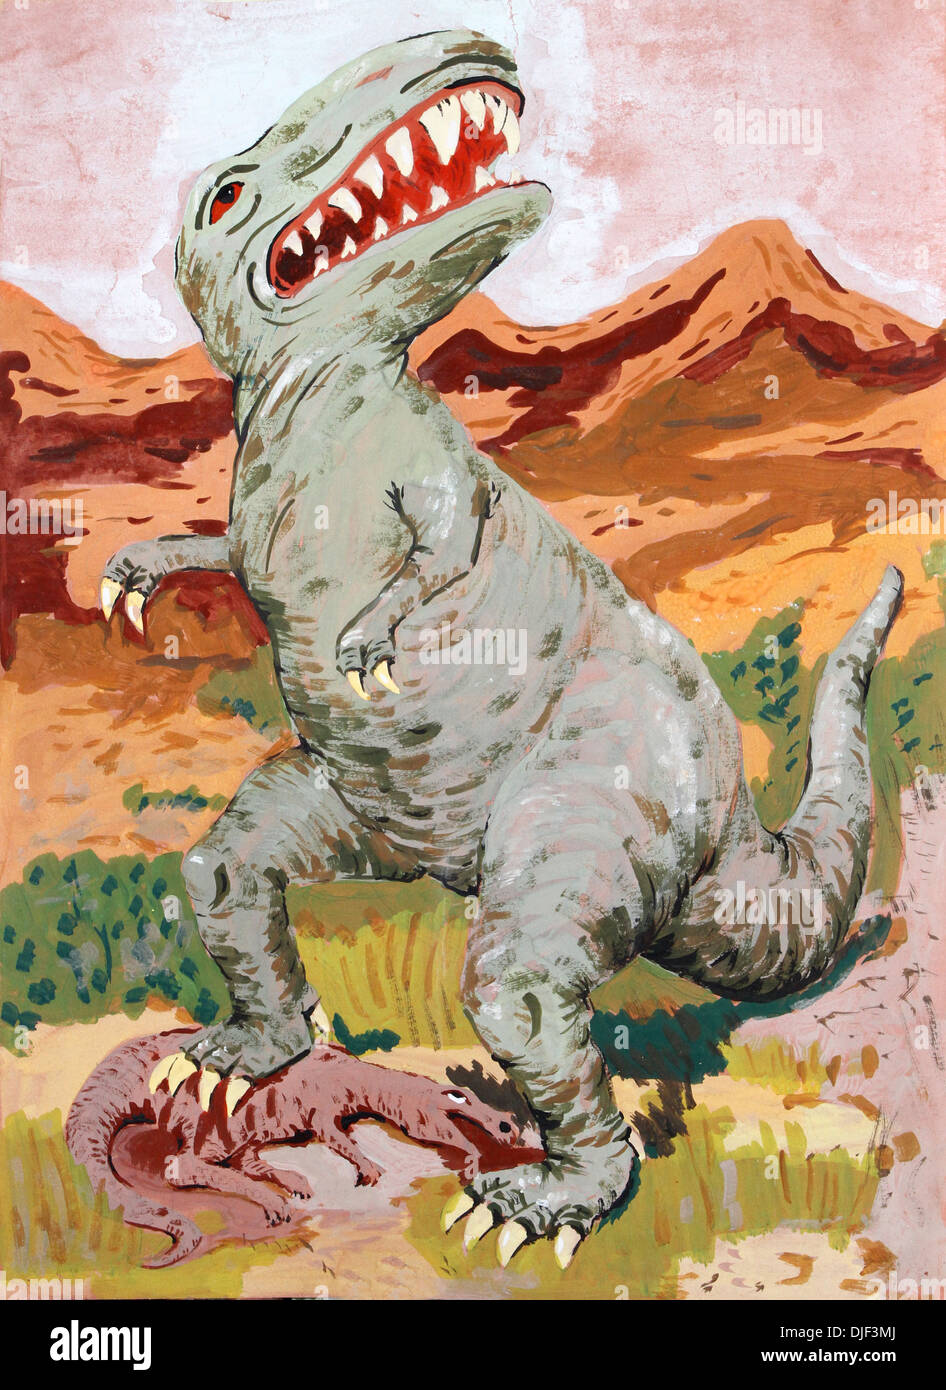 Tyrannosaurus rex drawing hi-res stock photography and images - Alamy